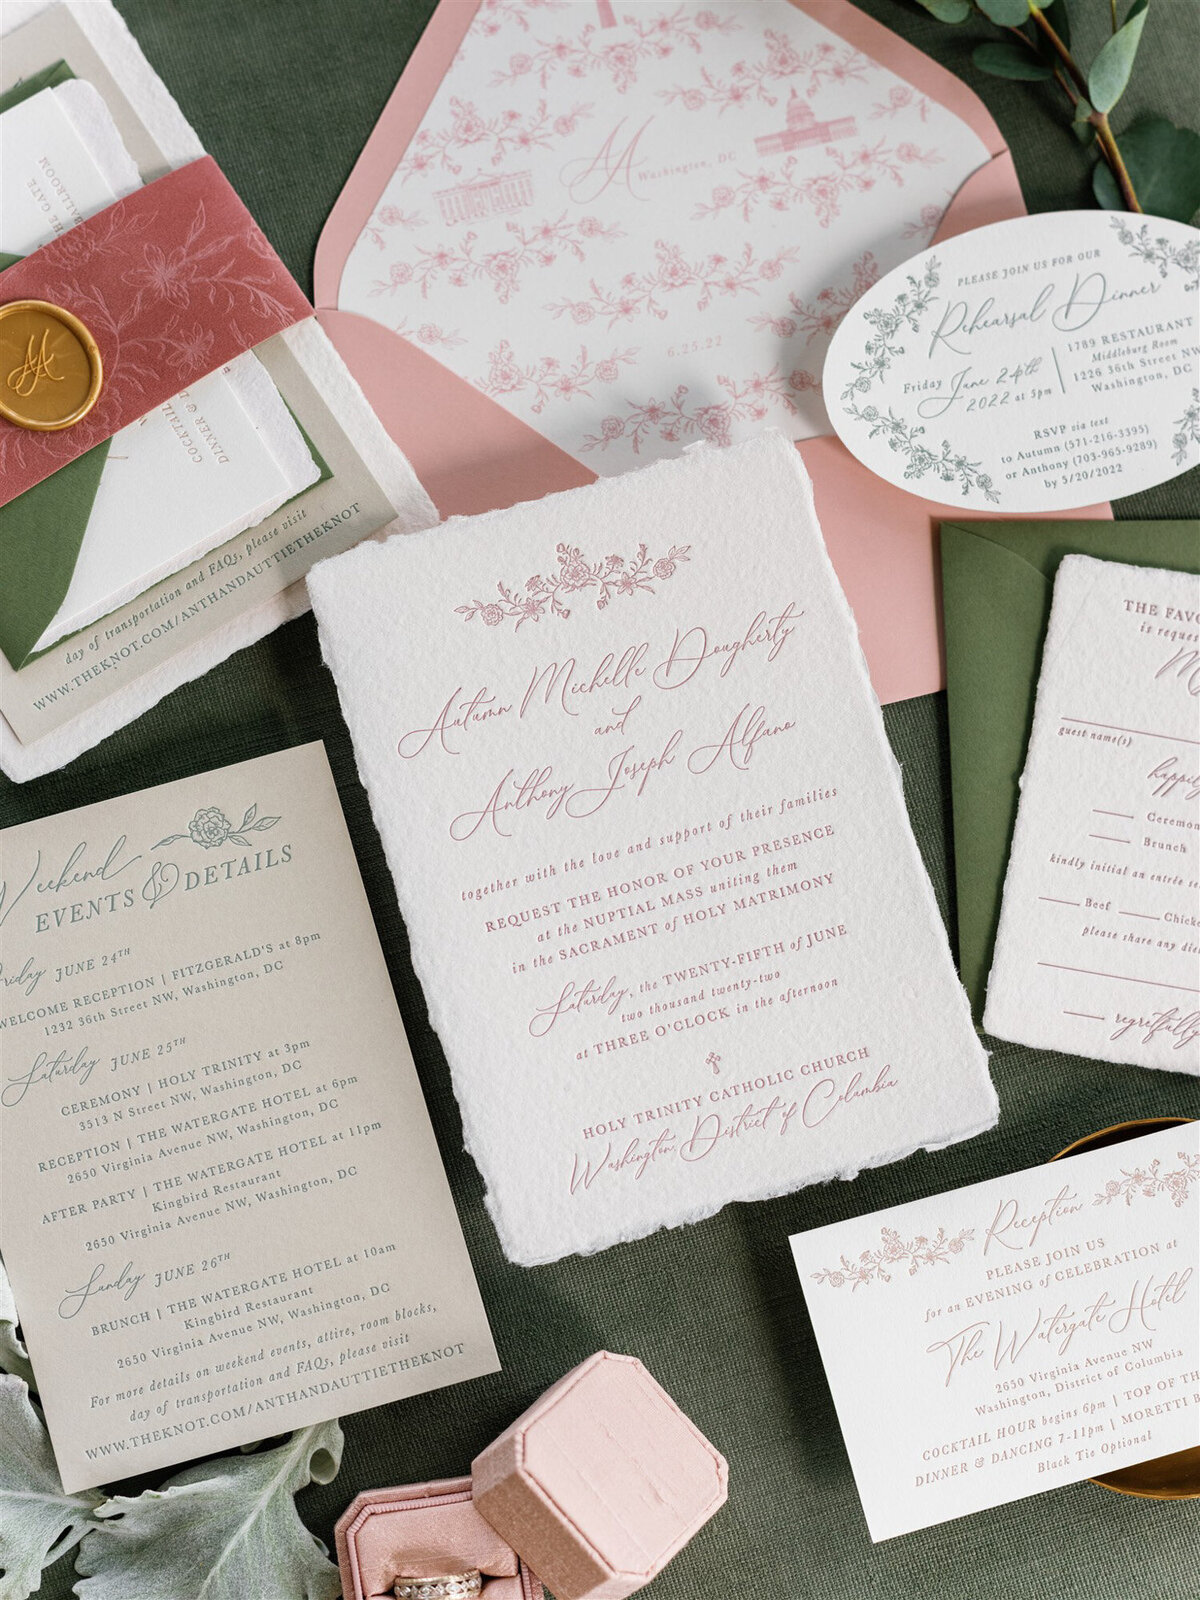 wedding details with invitation, menu, bands